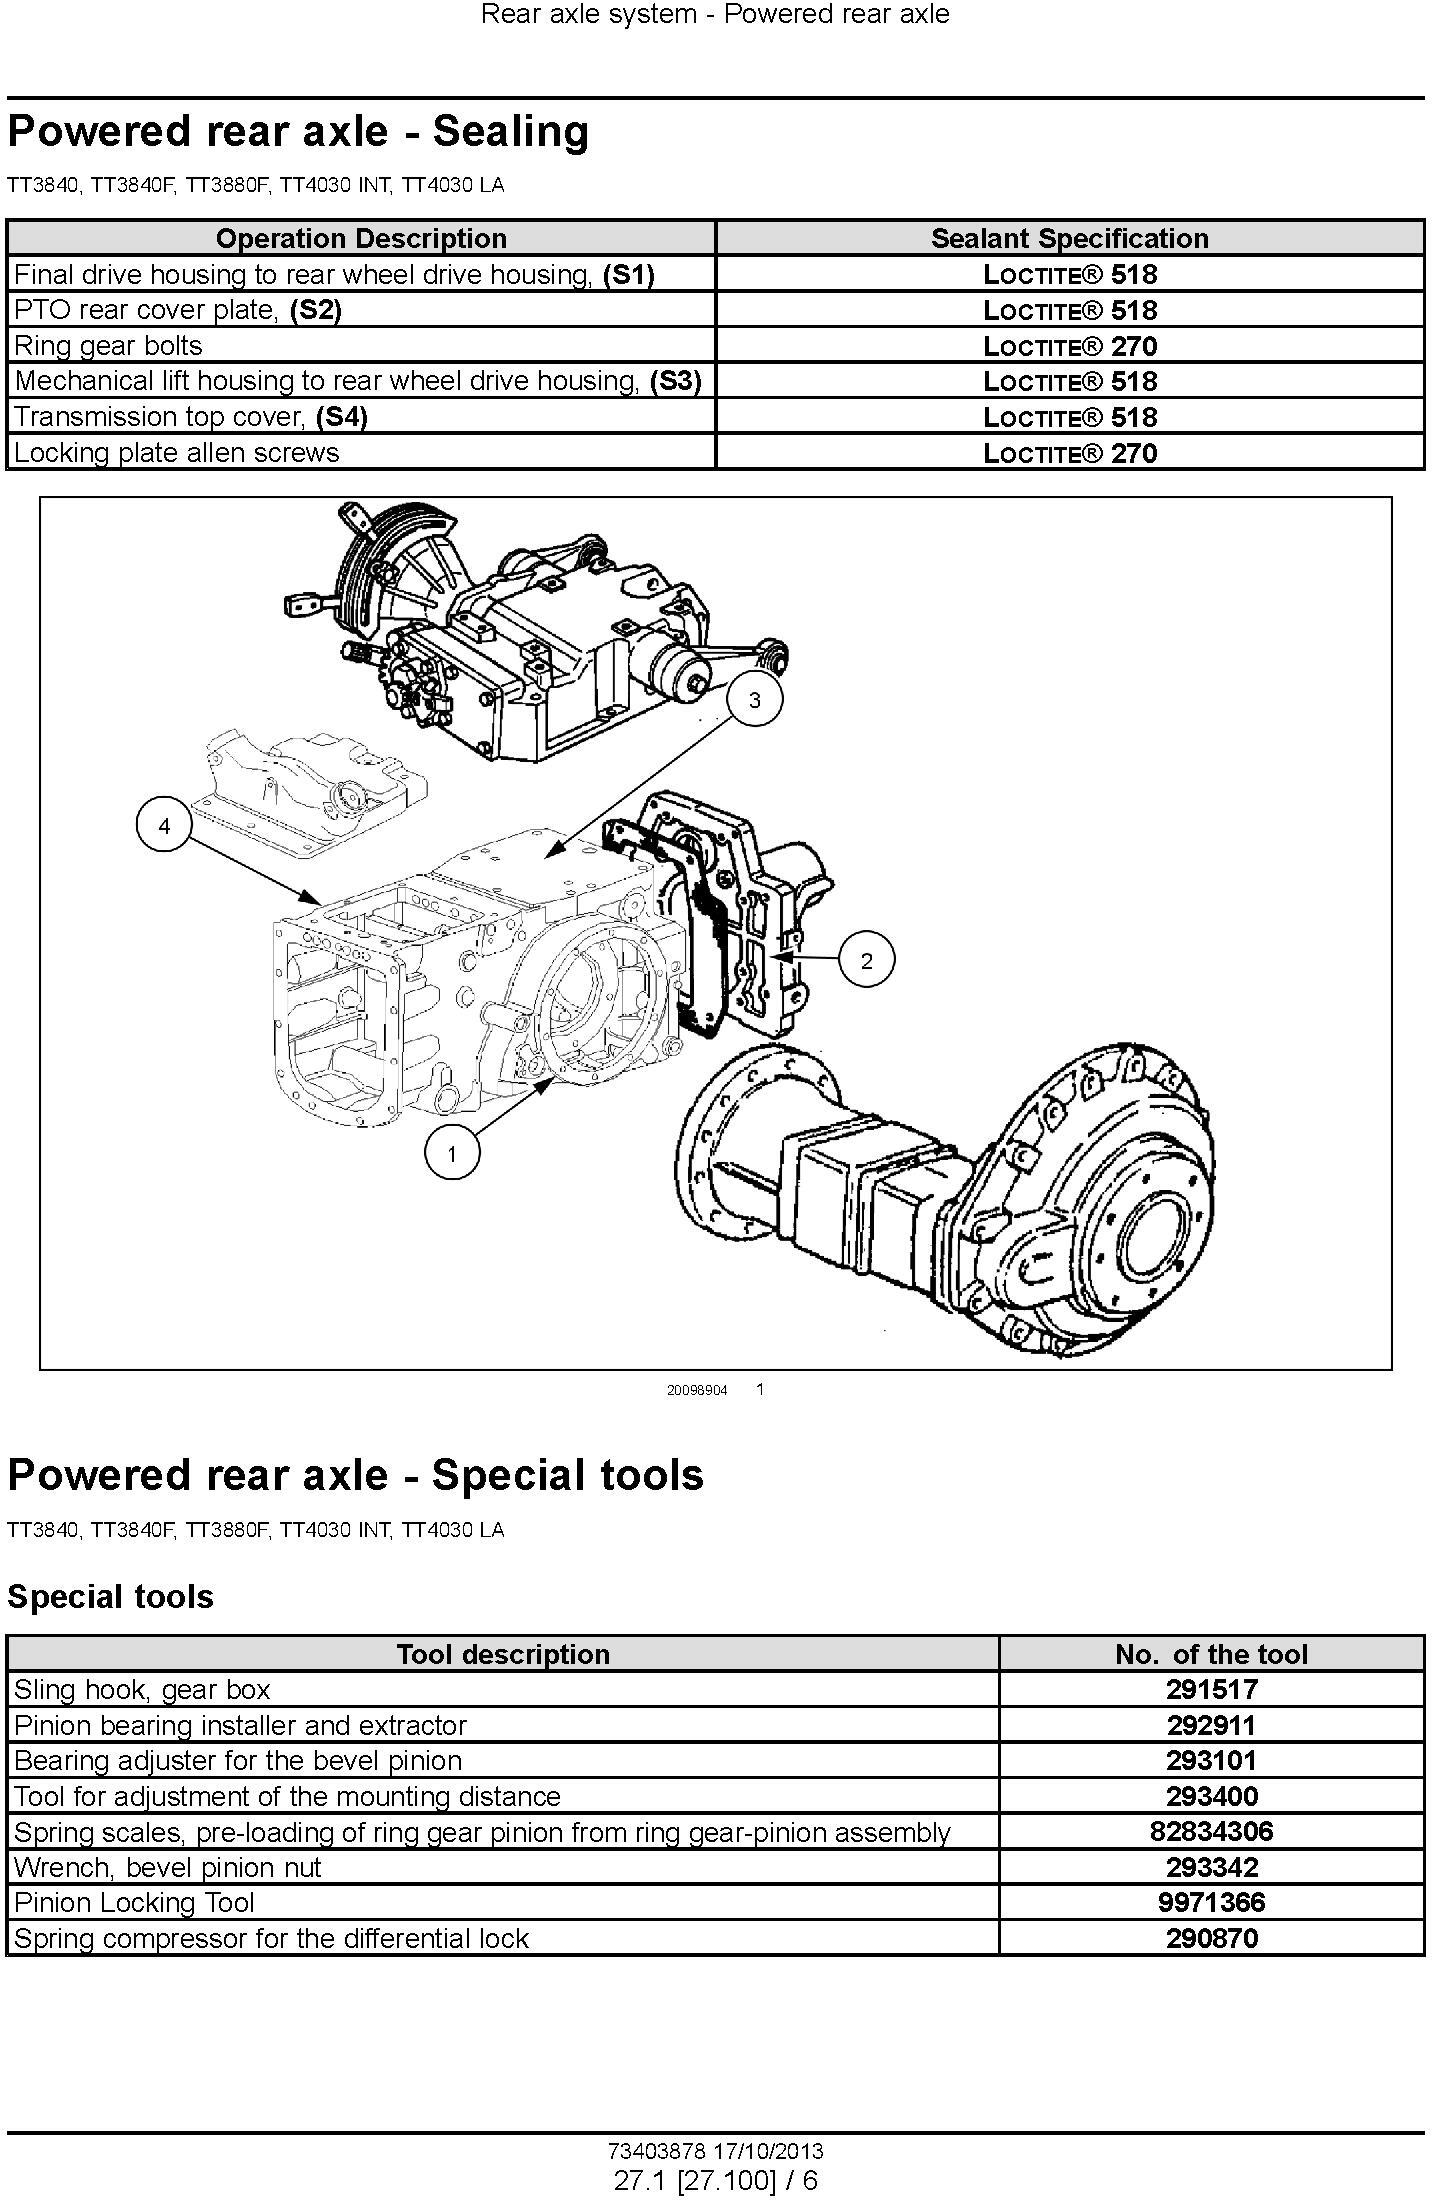 New Holland TT3840, TT3840F, TT3880F, TT4030 Tractors Service Manual - 3